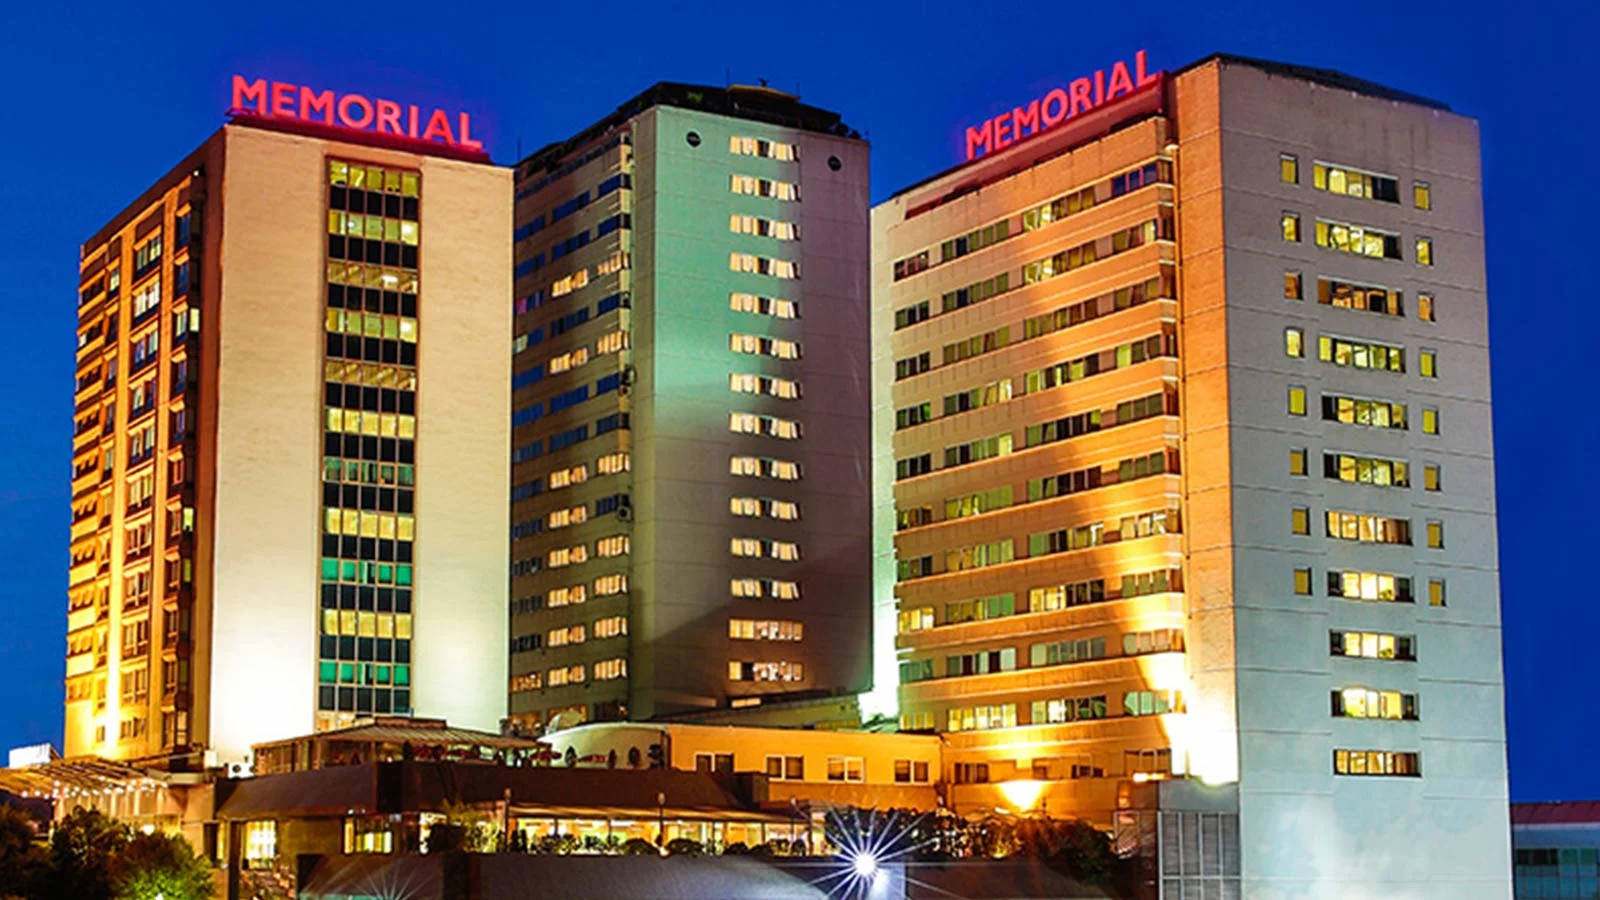 Memorial Sisli Hospital - 3